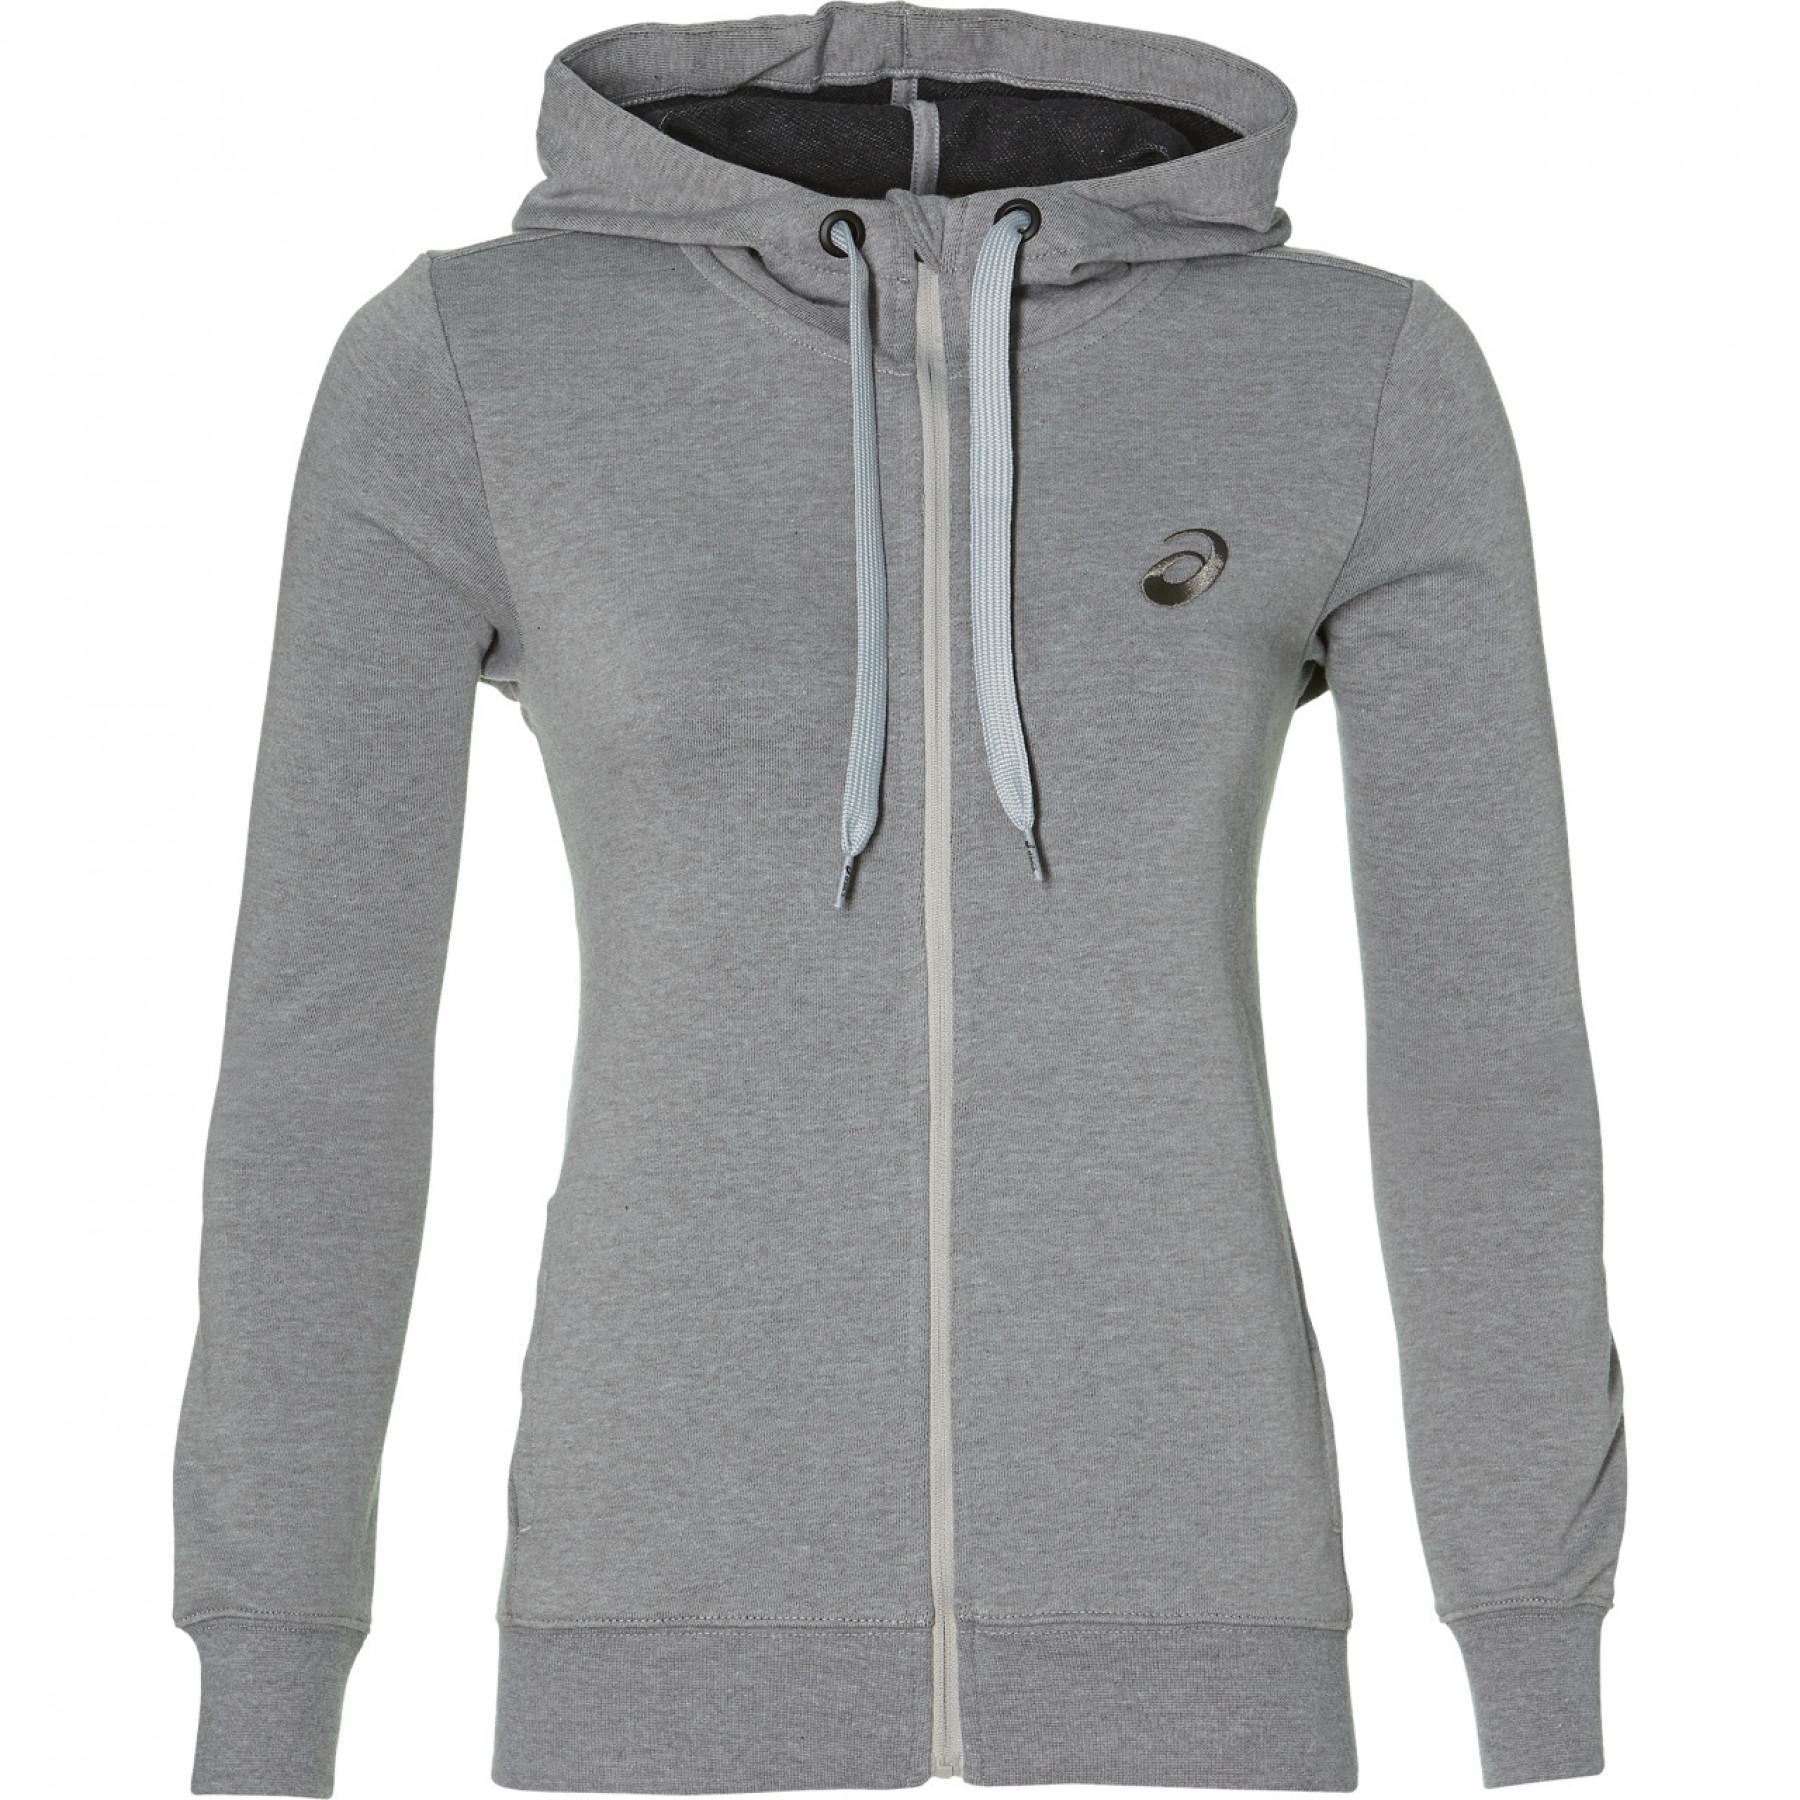 Women's hoodie Asics chest logo fz